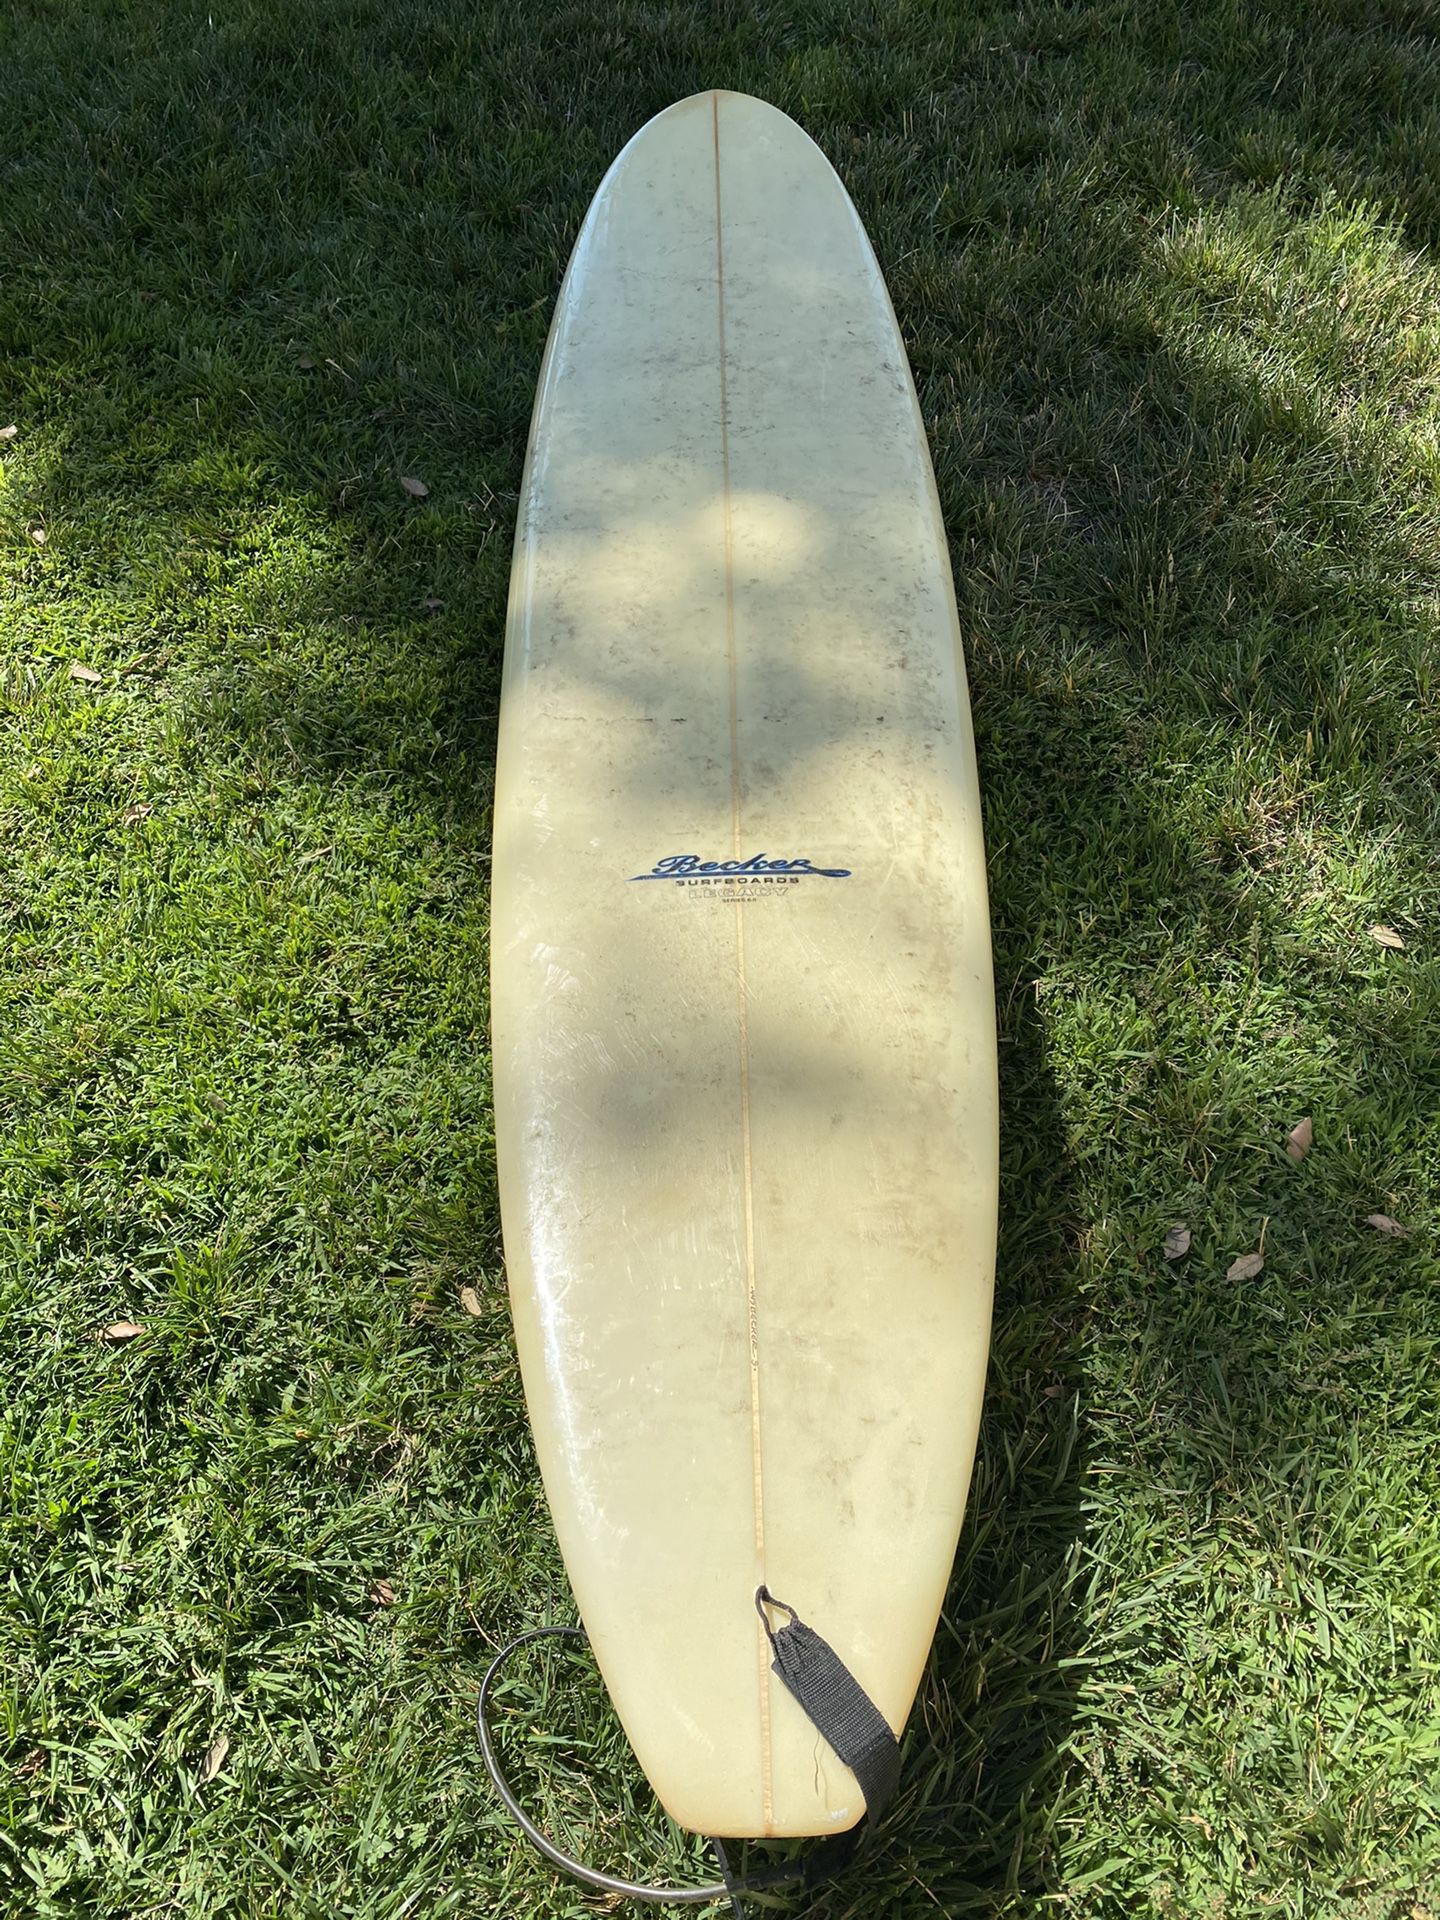 Becker Surfboard Legacy Series 6.0 used